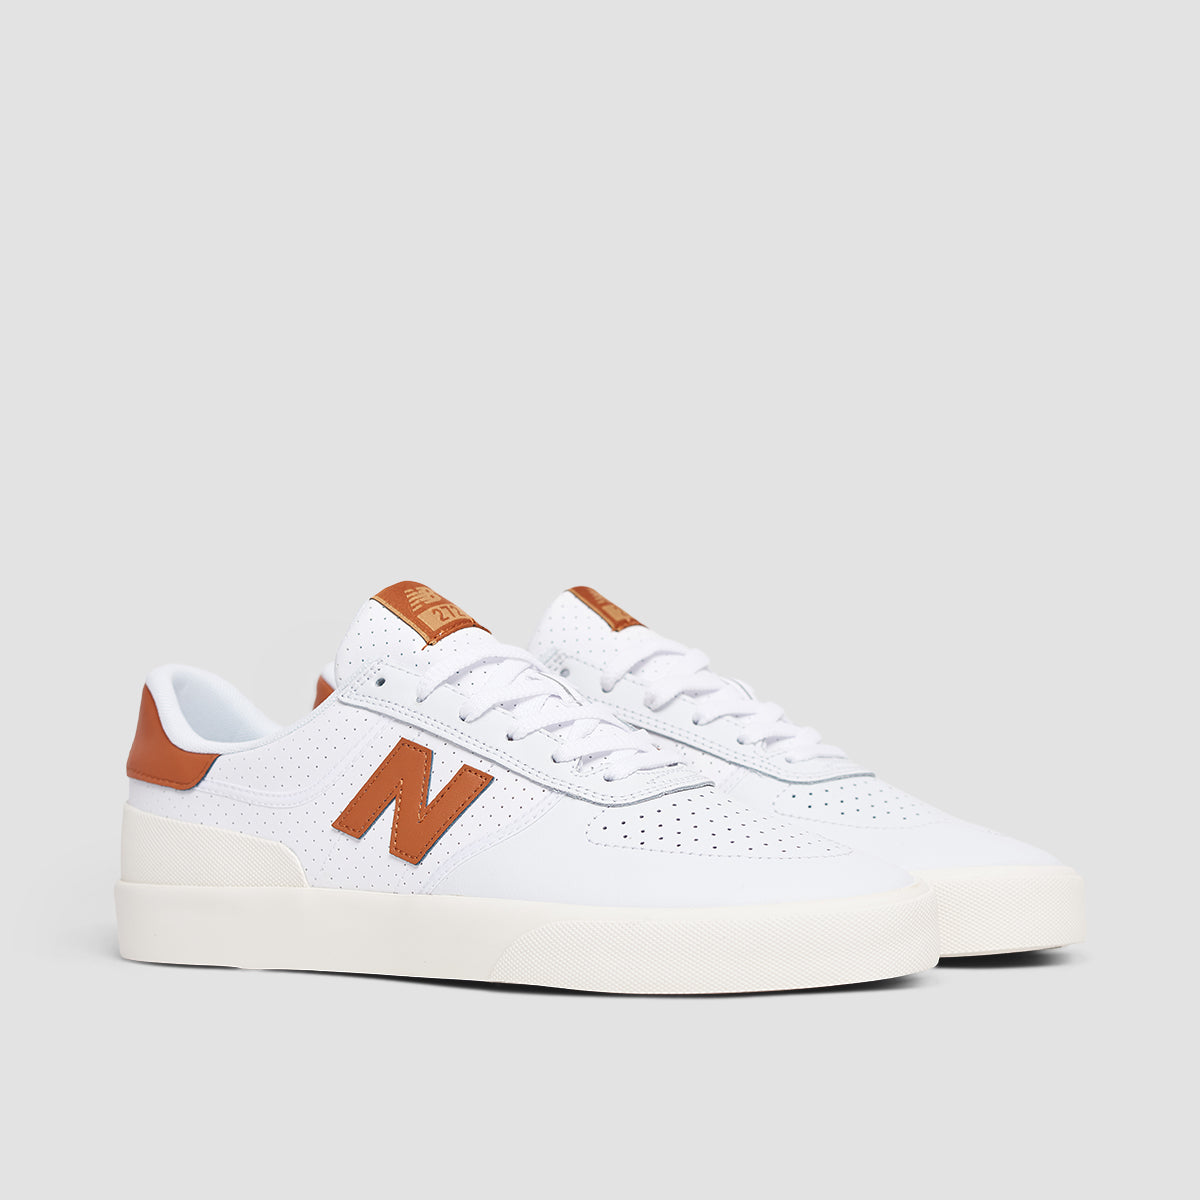 New Balance Numeric 272 Shoes - White/Copper